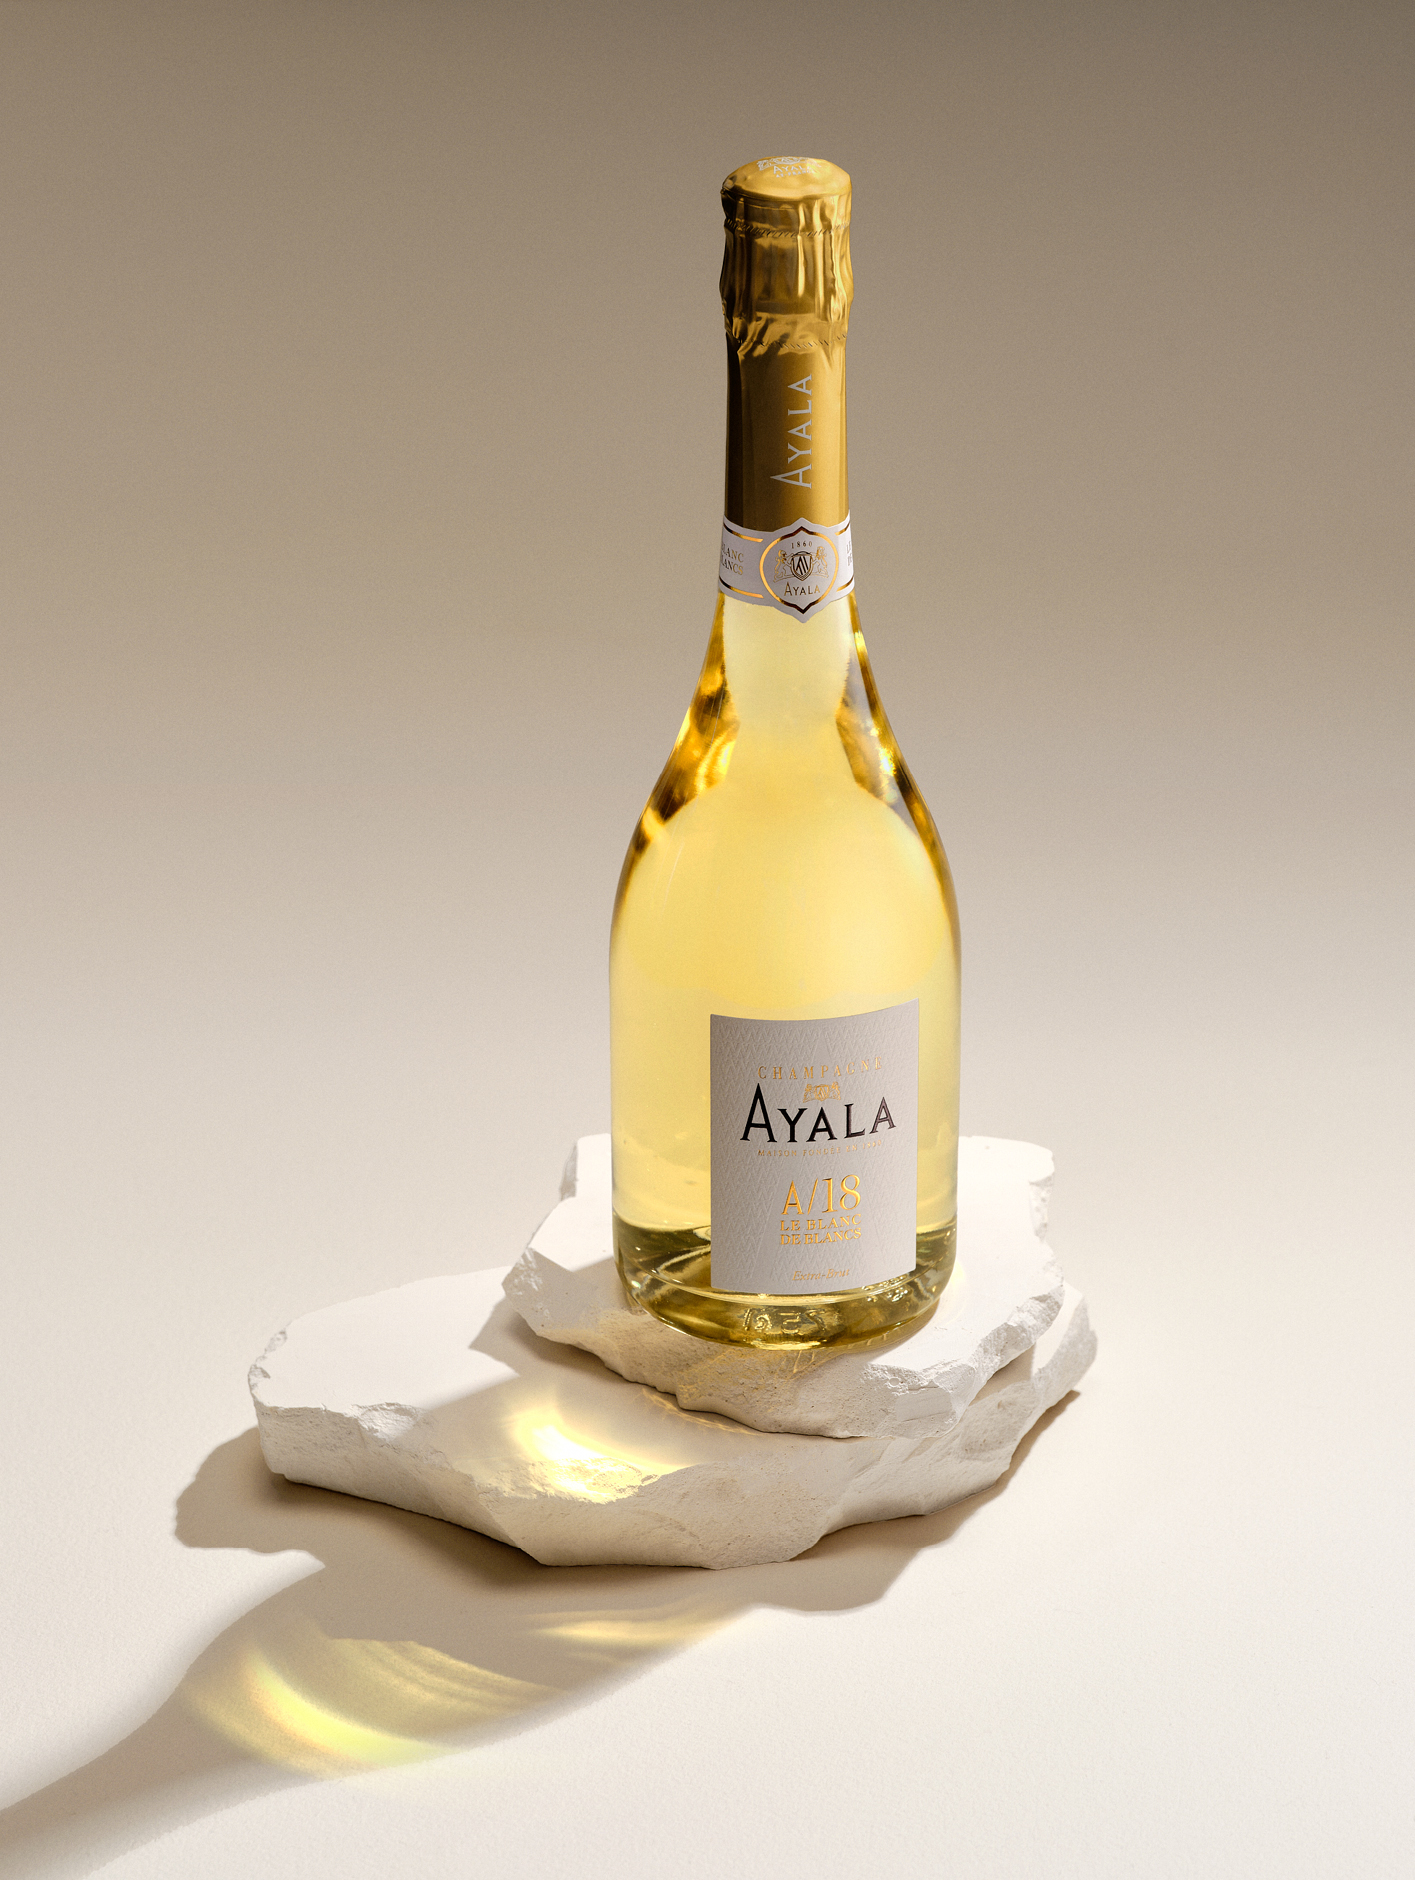 A bottle of Champagne AYALA Le Blanc de Blancs A/18